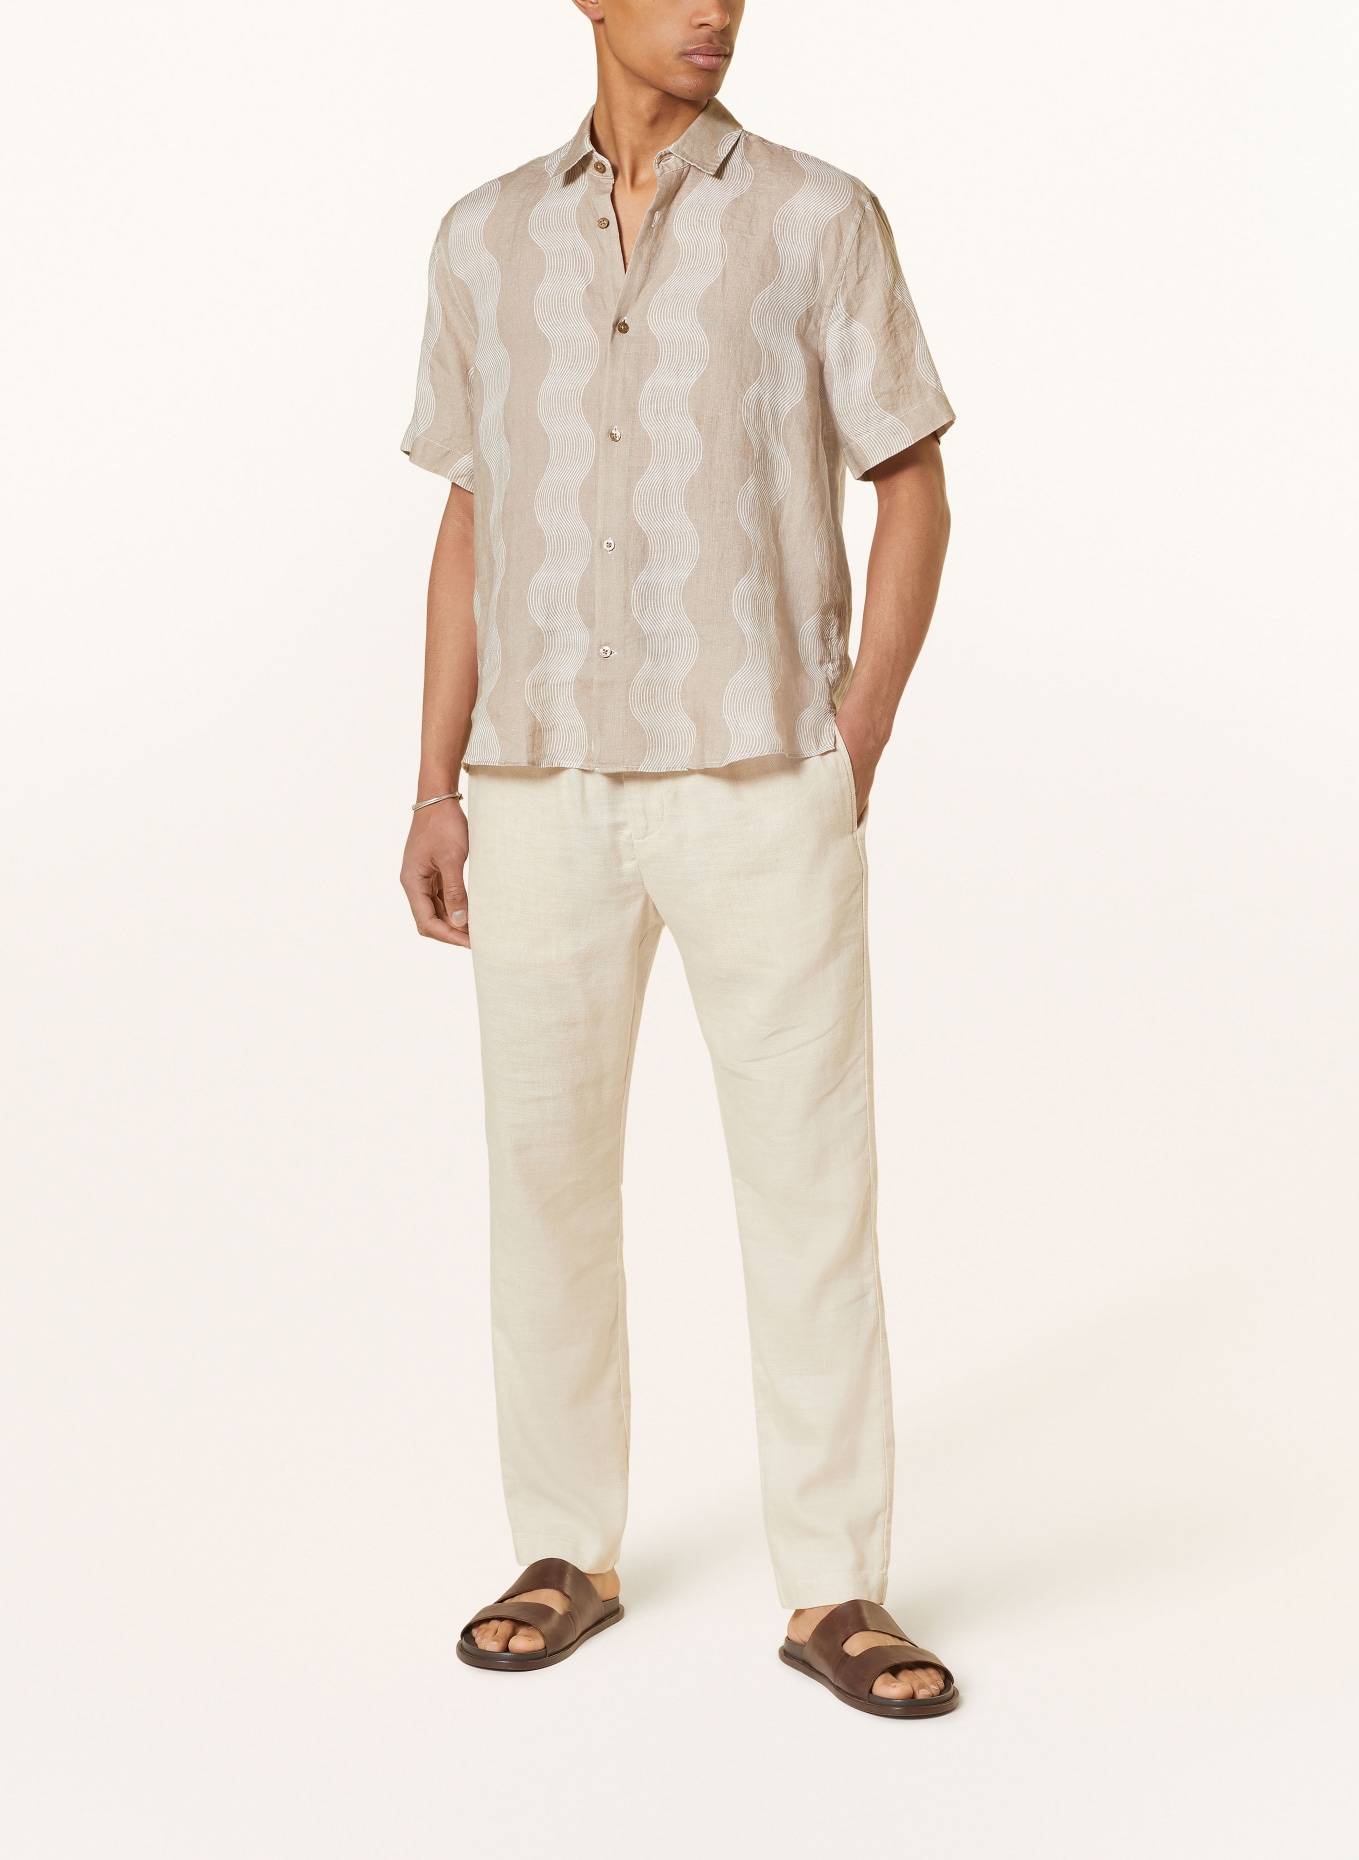 FRESCOBOL CARIOCA Short sleeve shirt CASTRO CABANA comfort fit in linen, Color: 759 Truffle (Image 2)